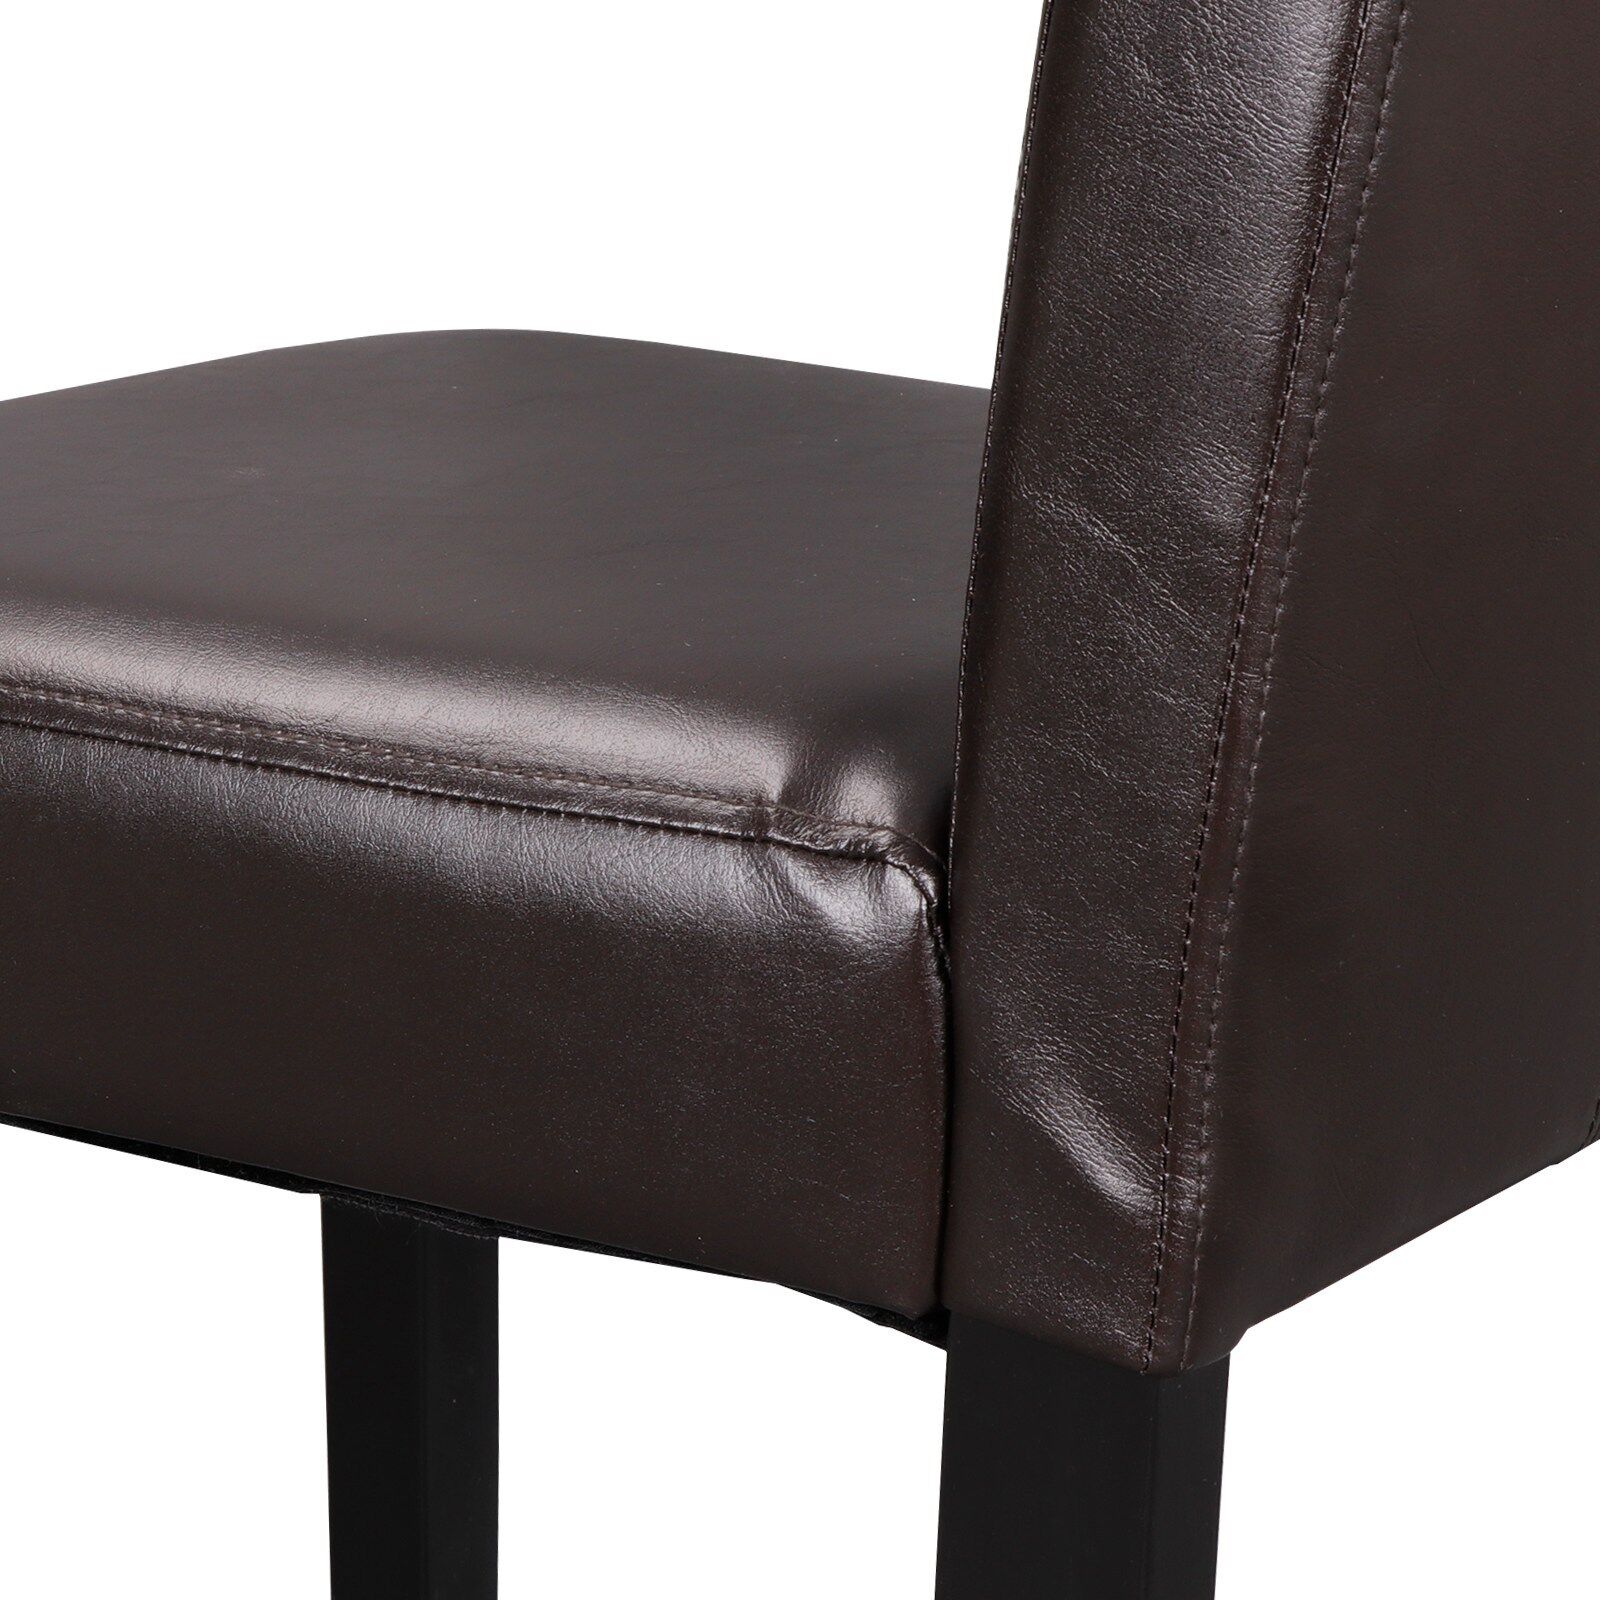 8 Set Dining Parson Room Chairs Kitchen Formal Elegant Leather Design  Brown